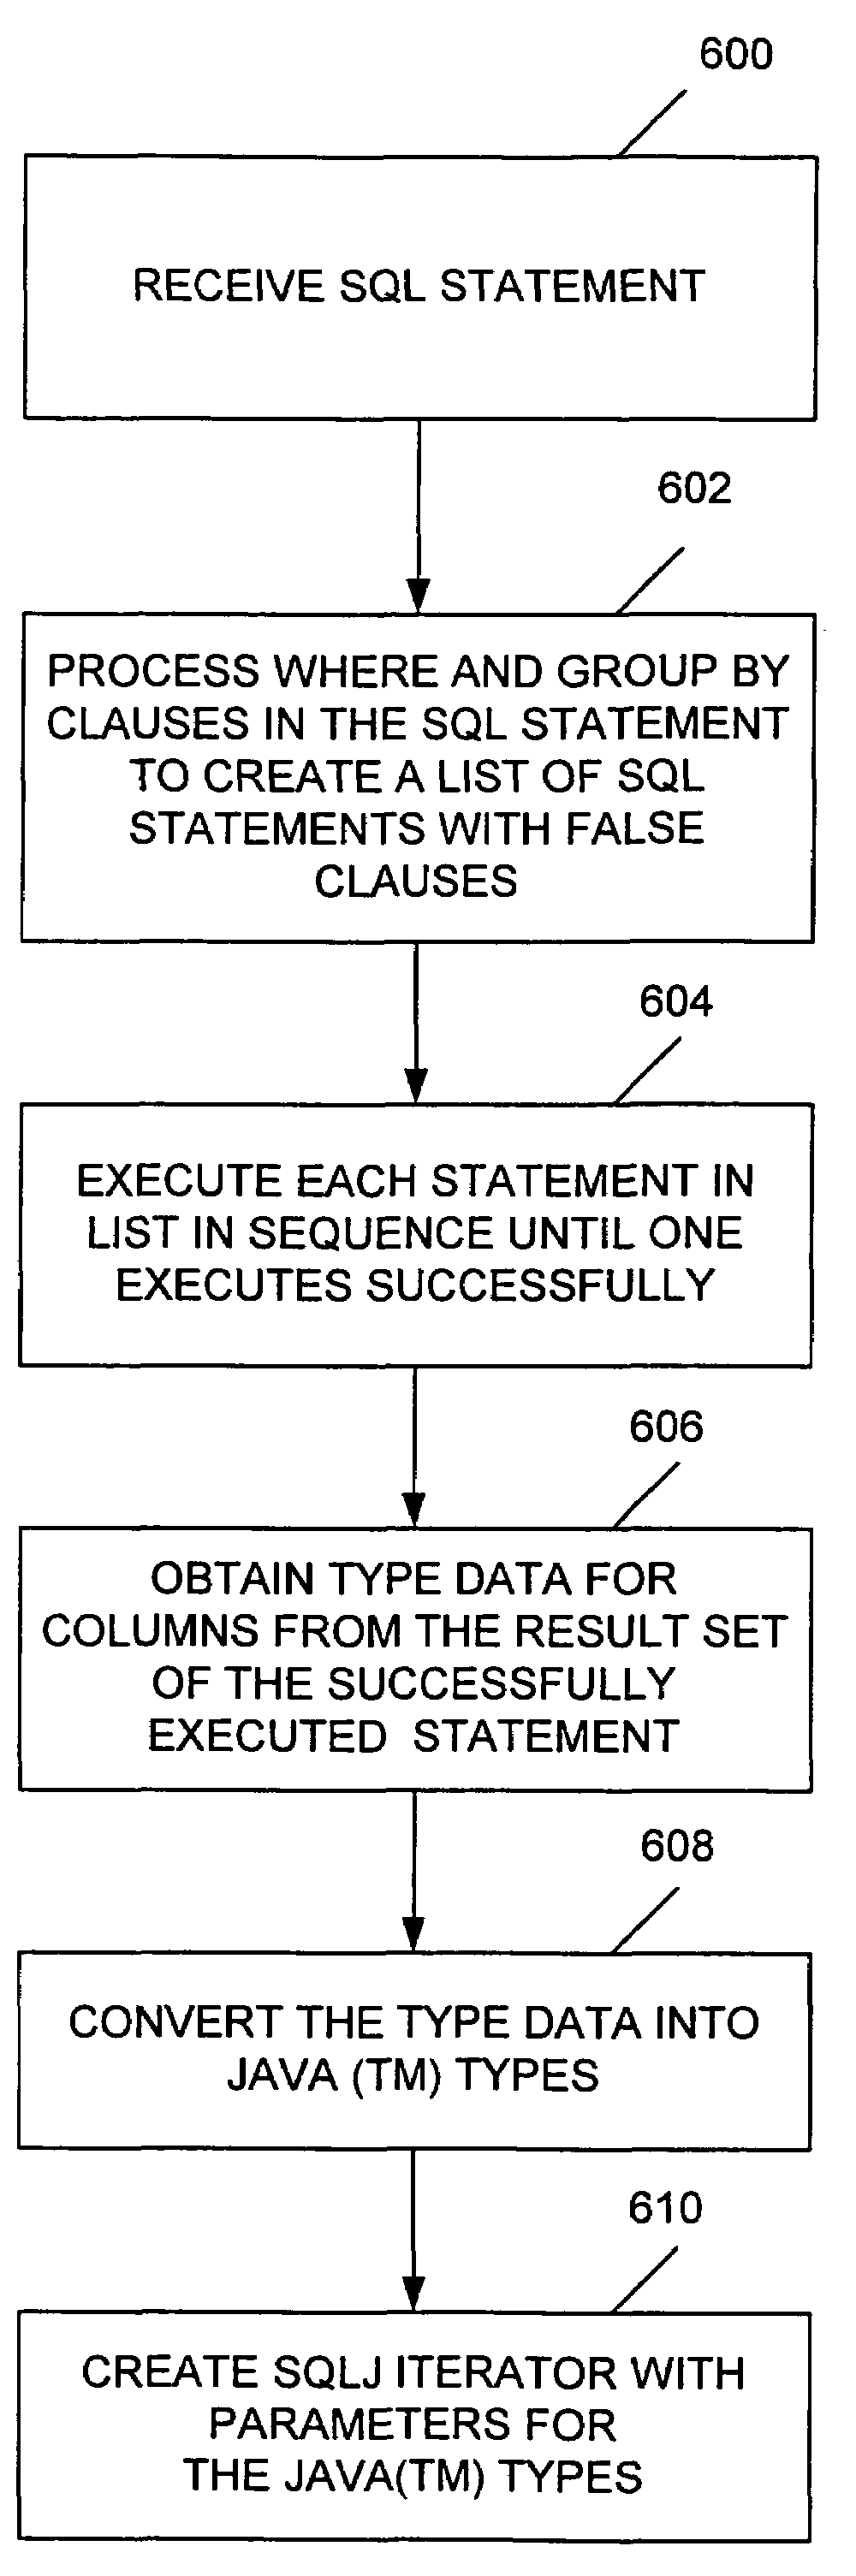 Cross-platform subselect metadata extraction